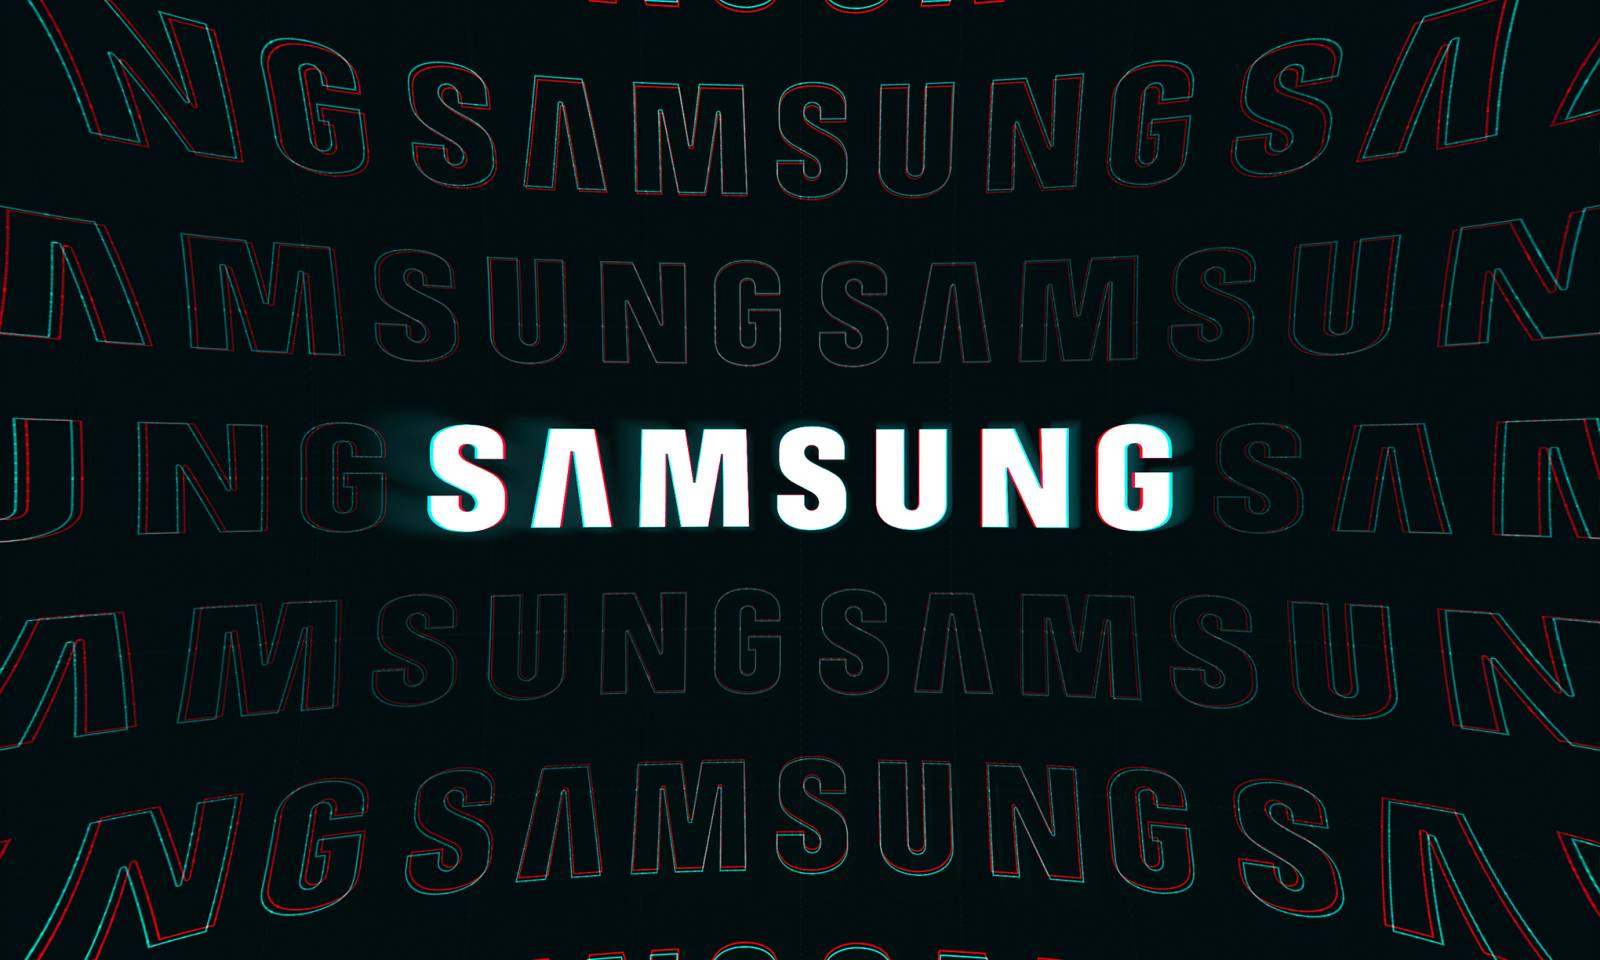 Samsung-gemiddelde